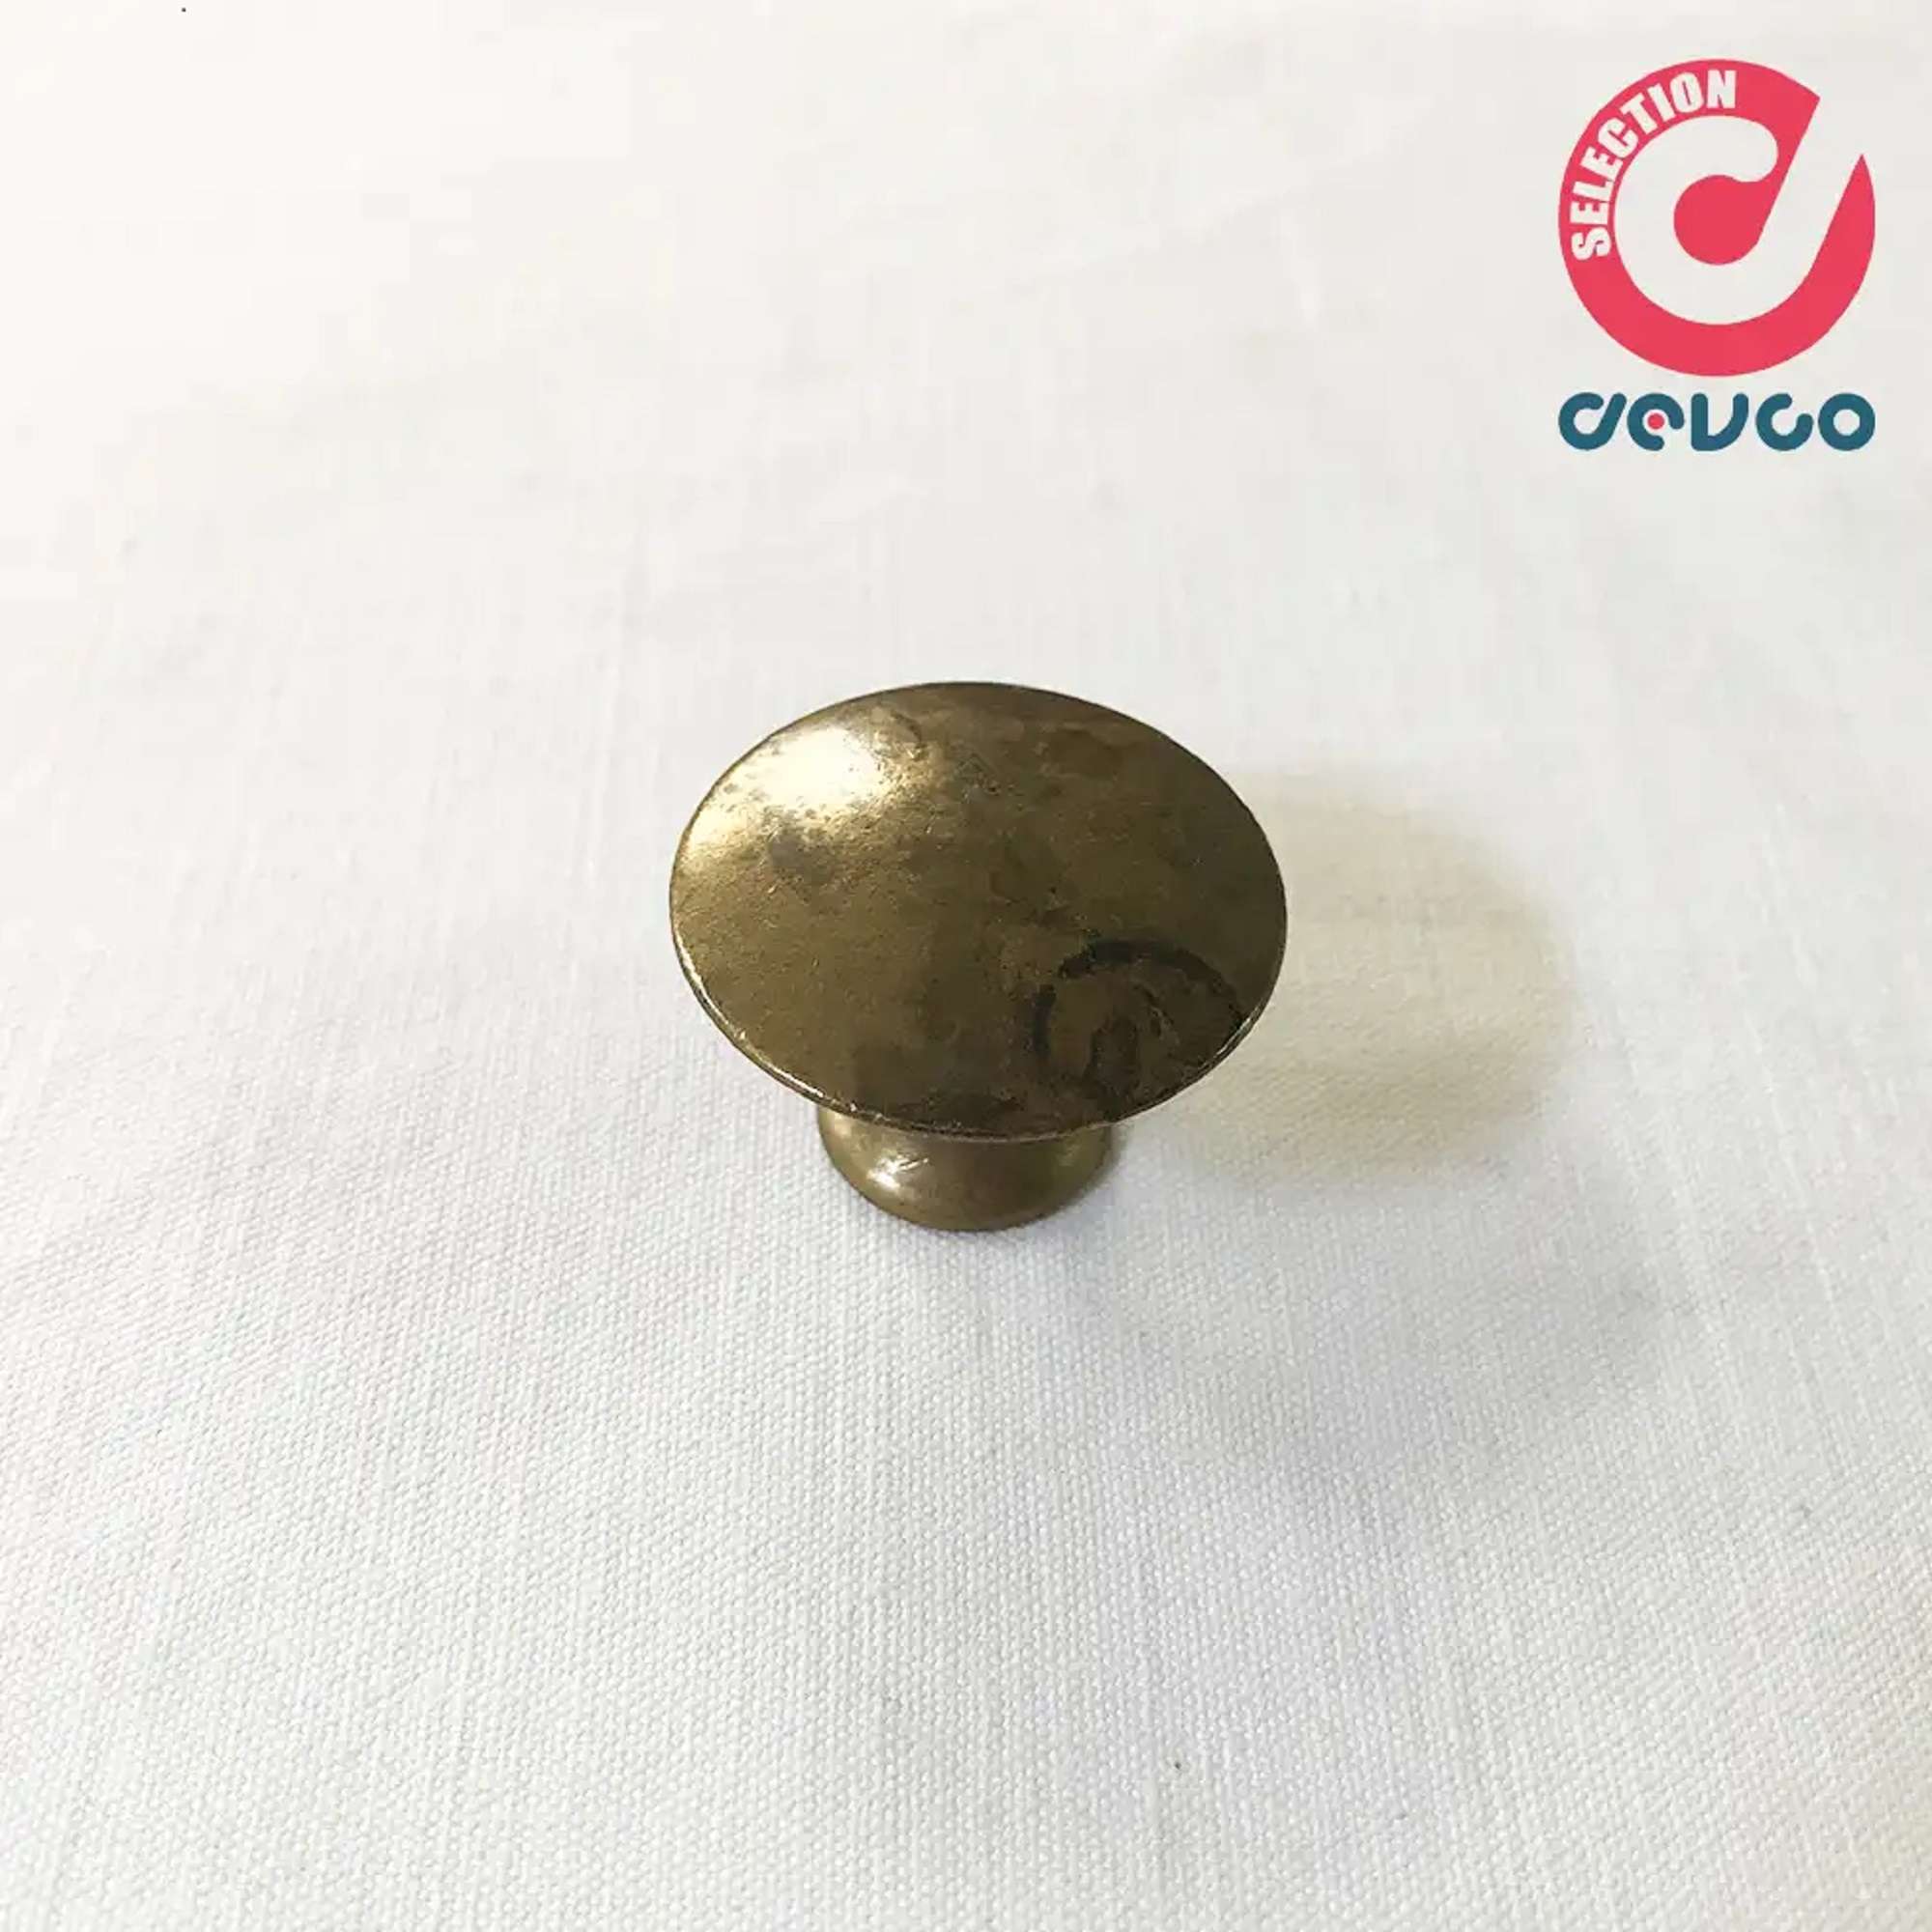 Natural brass knob including screw - Botter Luigi - 730 C